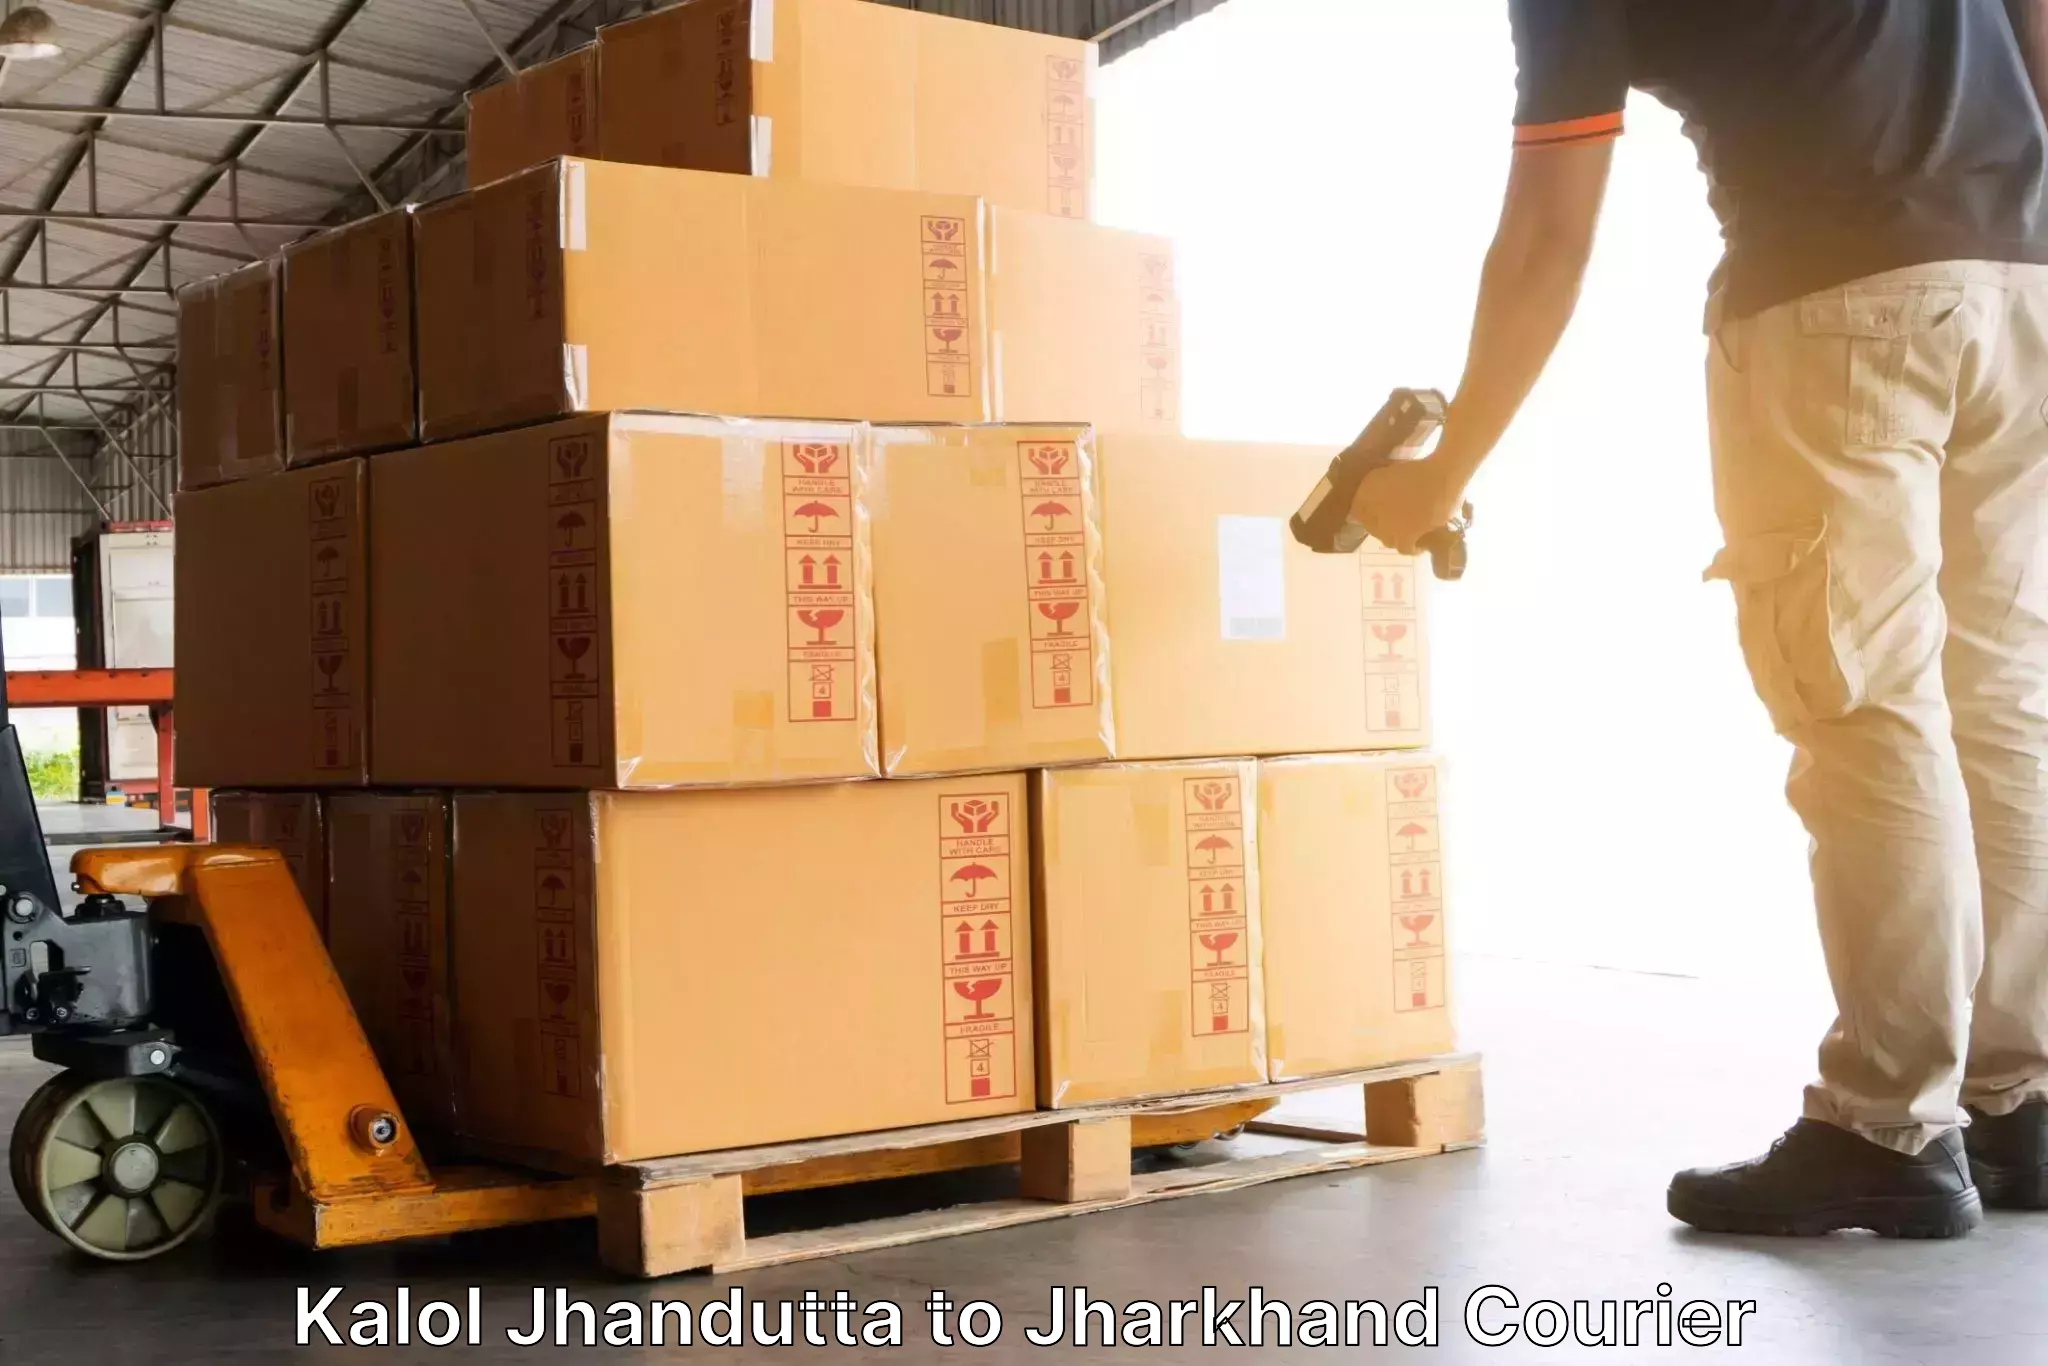 Full-service courier options Kalol Jhandutta to Bokaro